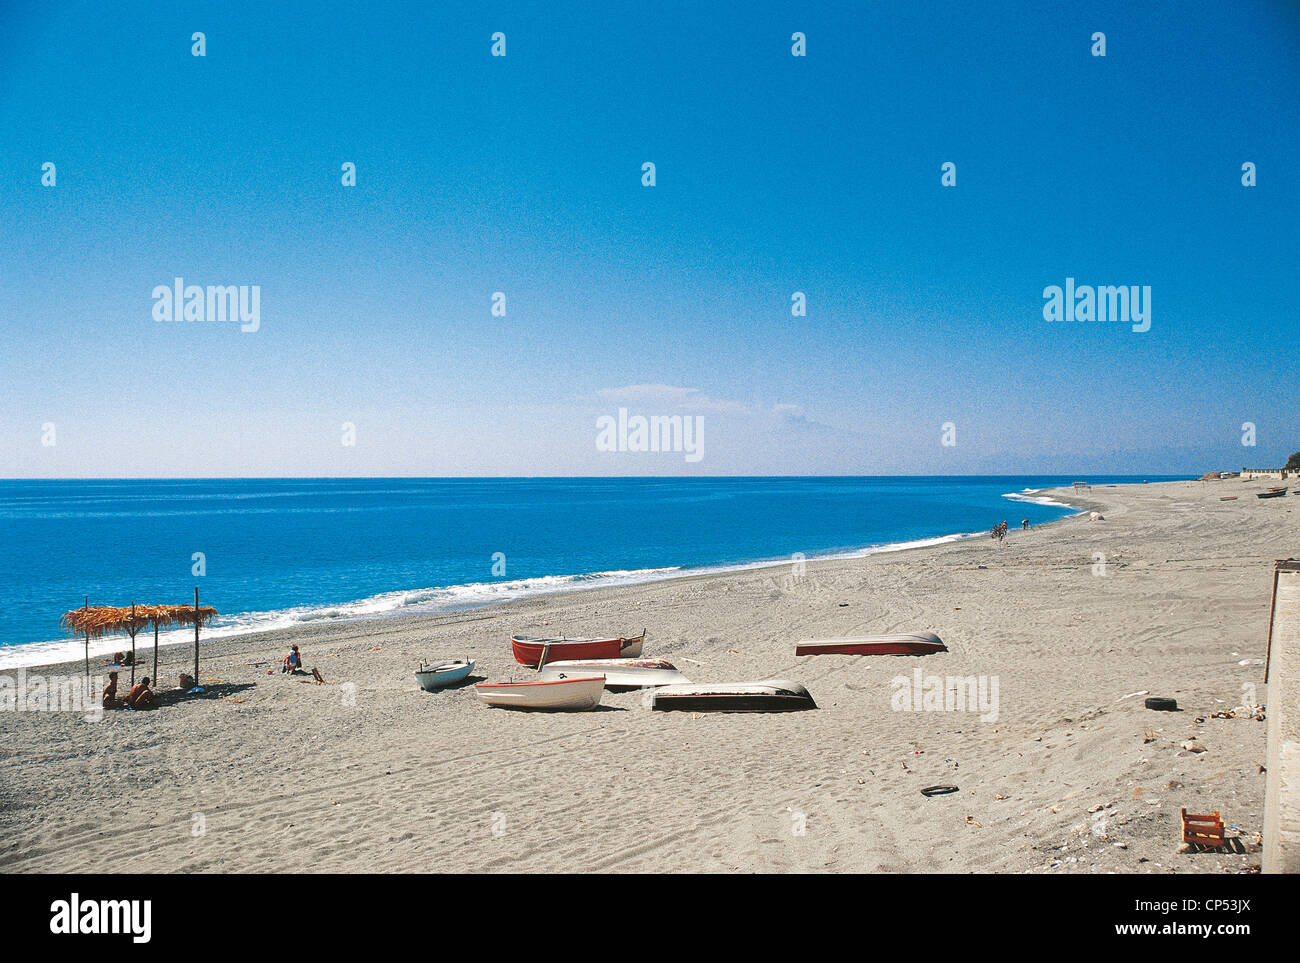 Melito porto salvo hi-res stock photography and images - Alamy